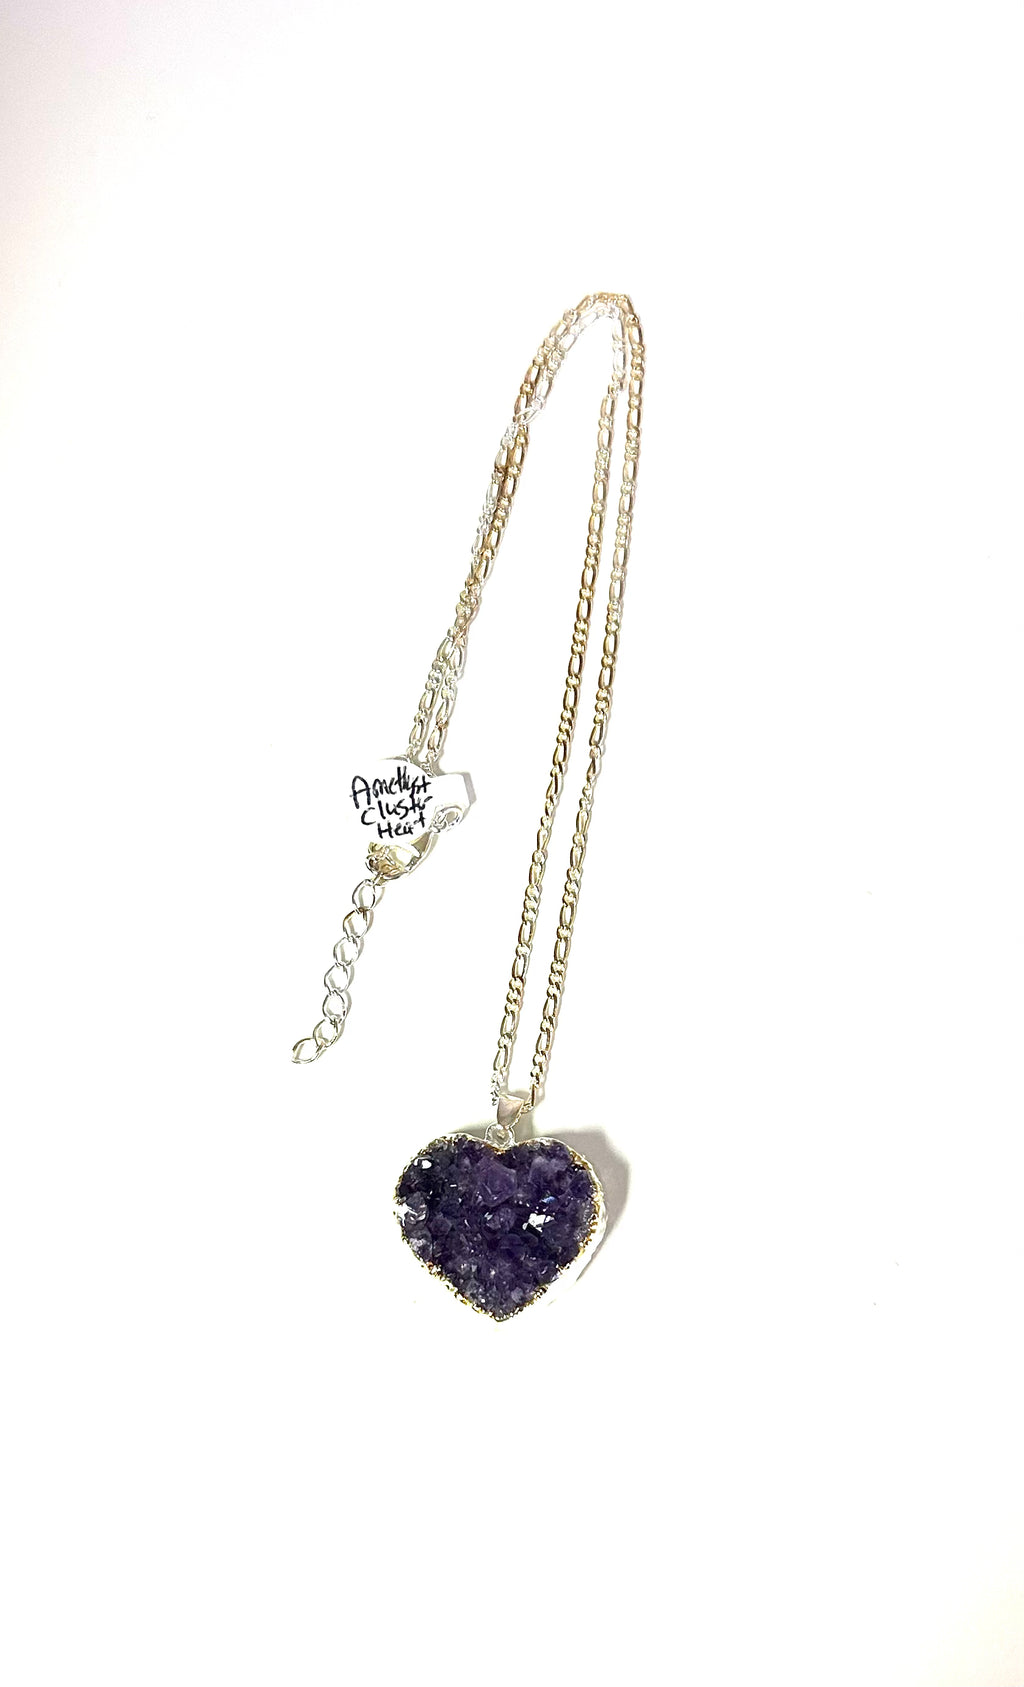 Amethyst Cluster Heart Necklace - Lighten Up Shop